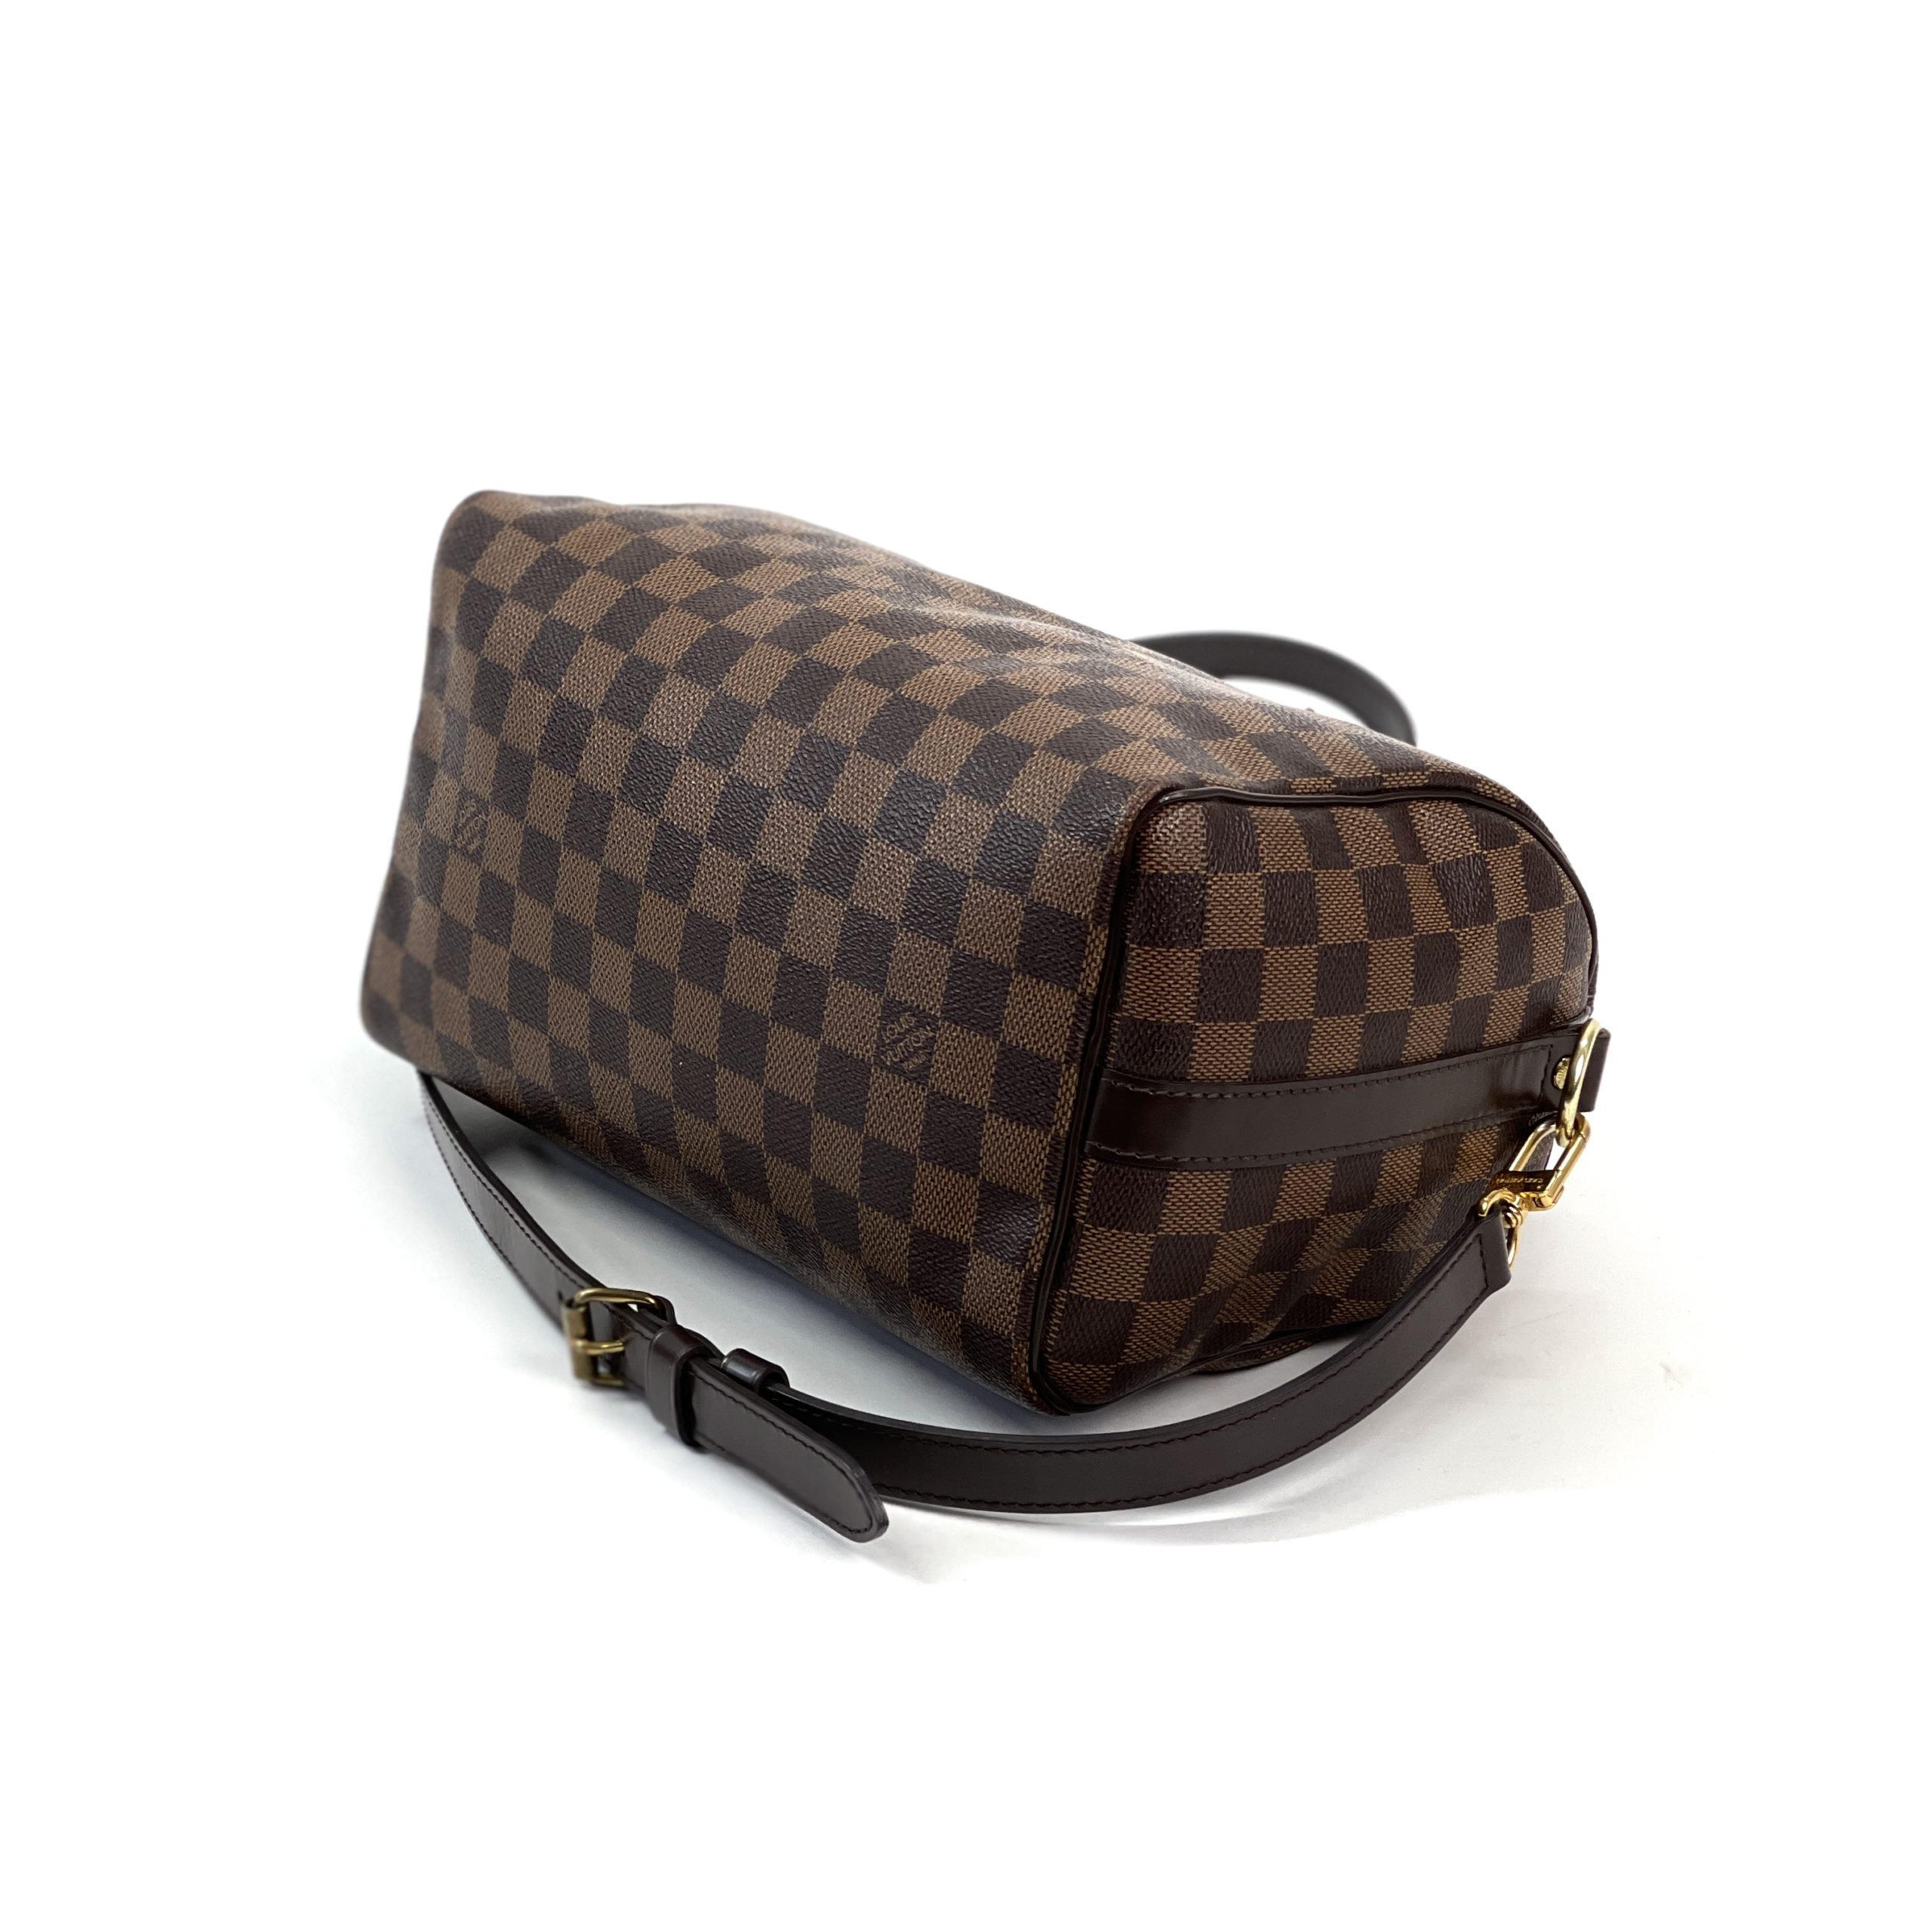 Louis Vuitton Damier Canvas Speedy 25 w/ Shoulder Strap Bag